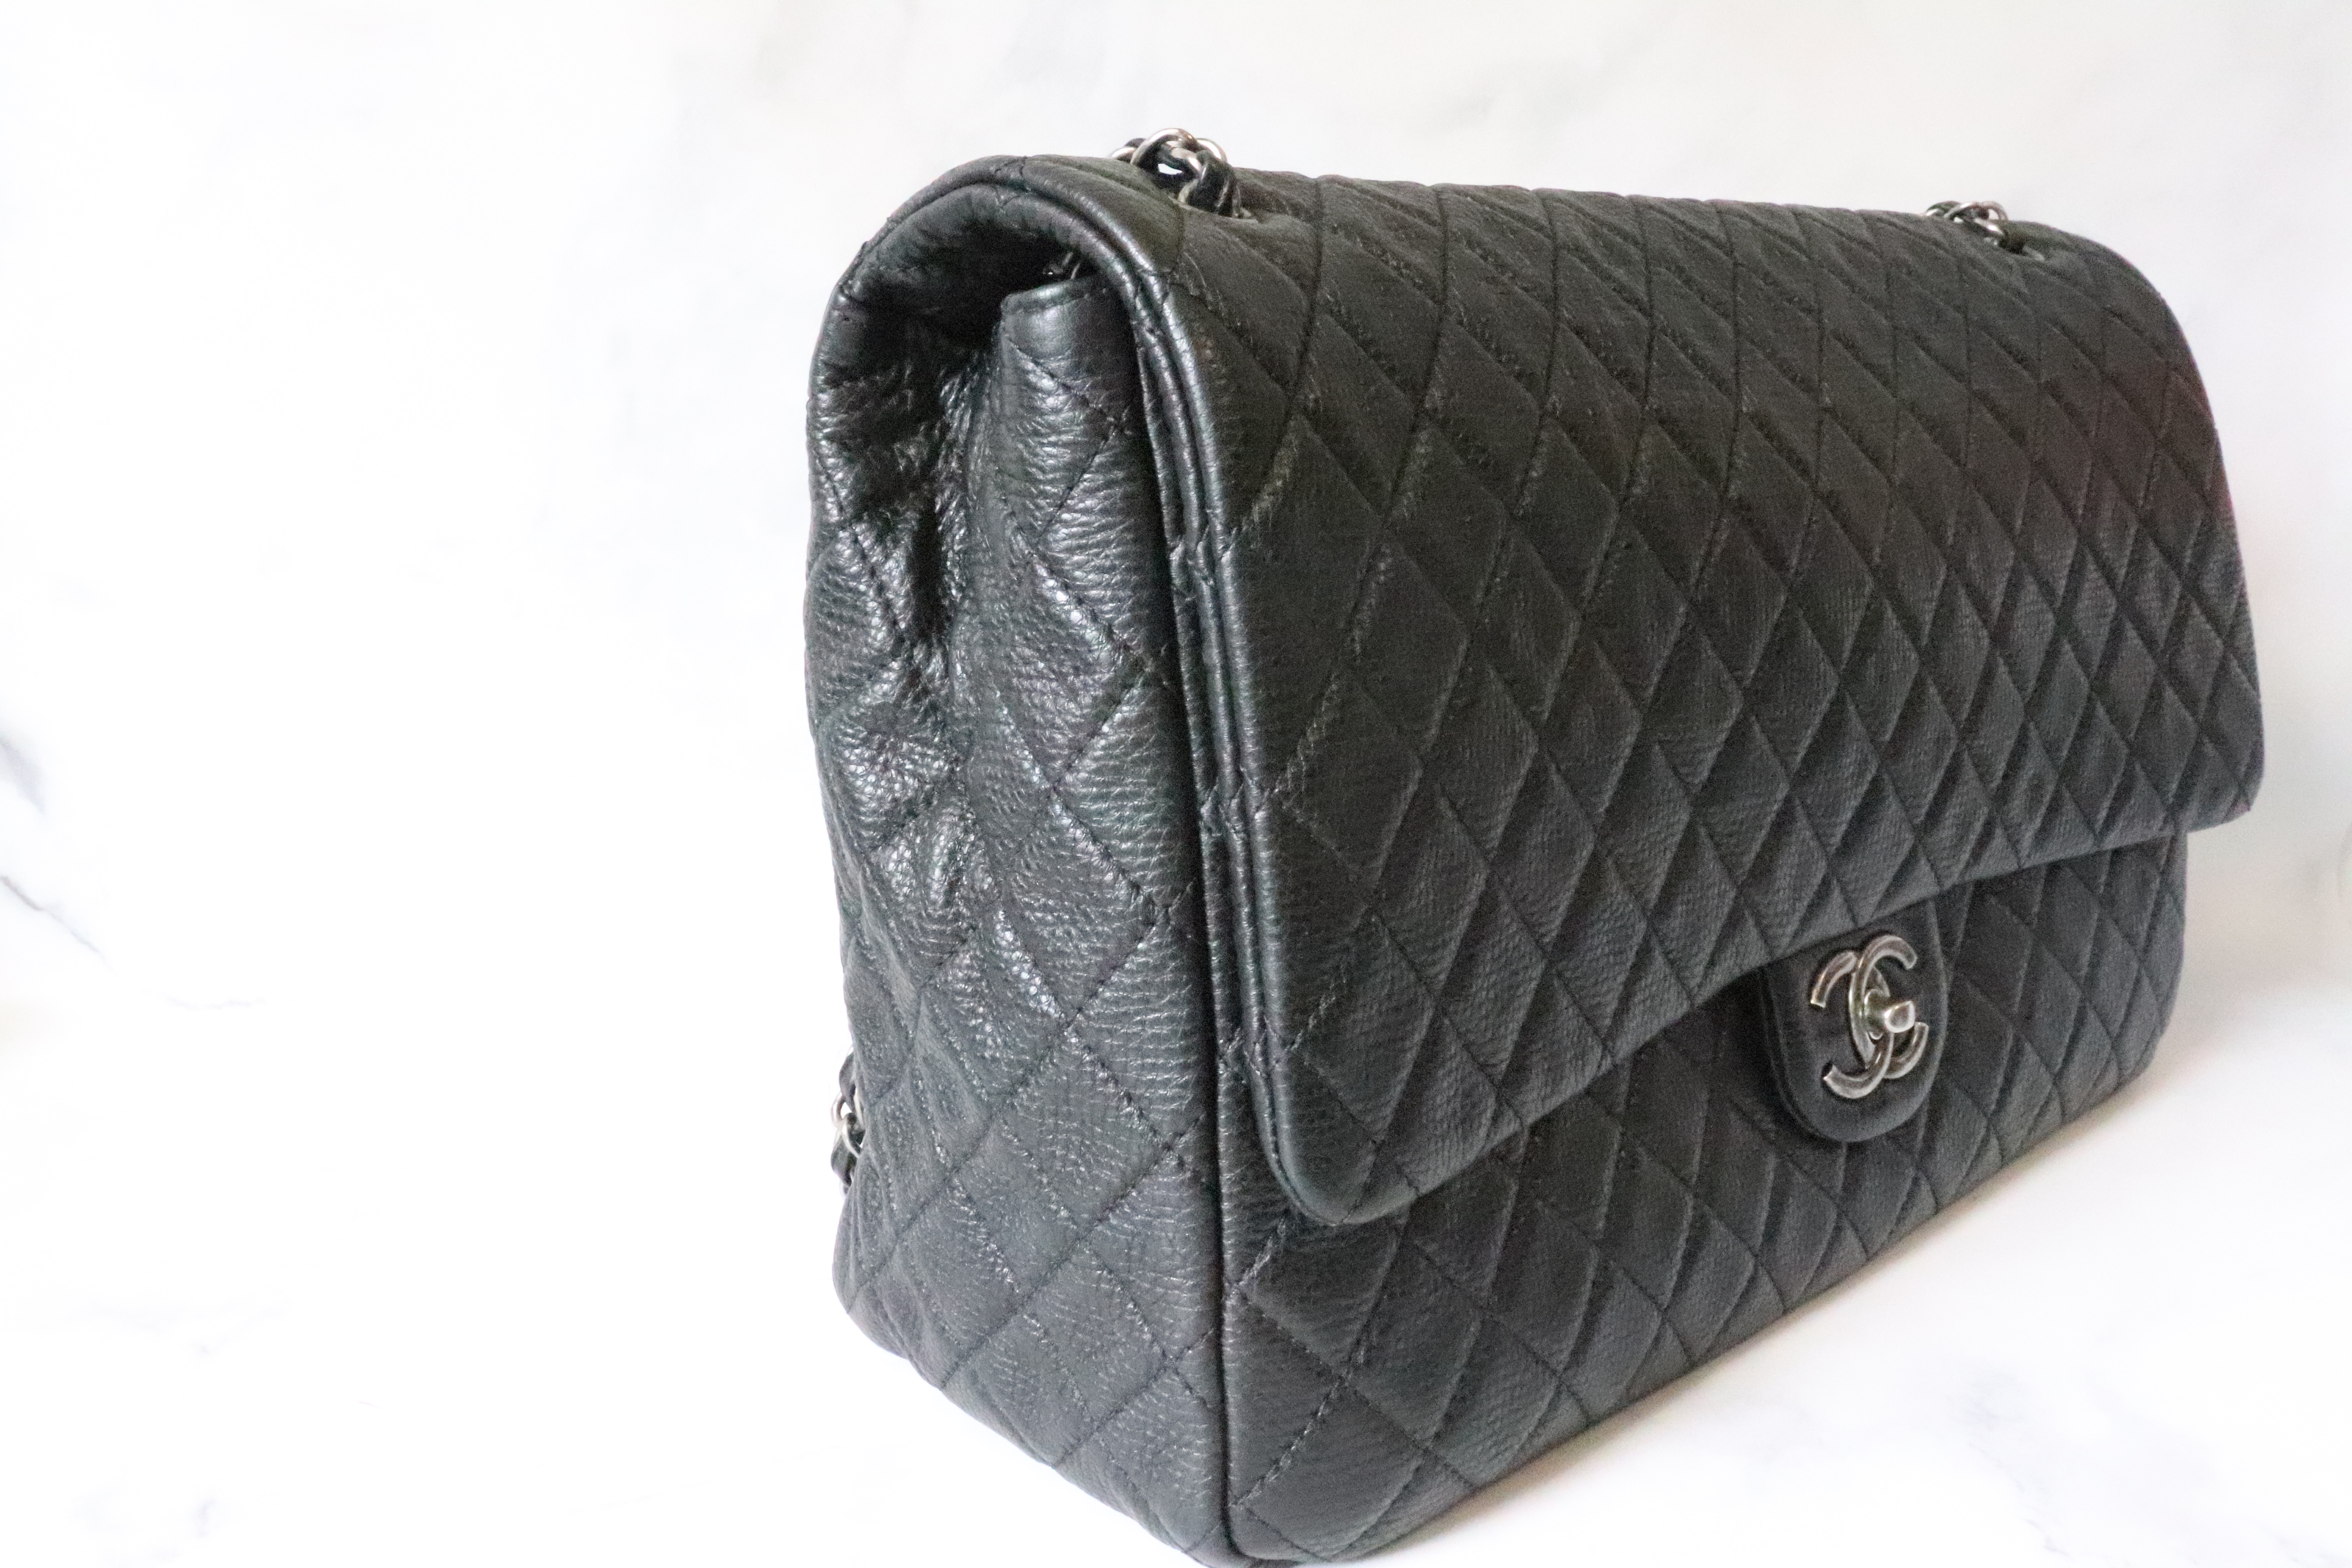 Chanel Black Caviar Classic Flap Bag XXL PHW - AGL1600